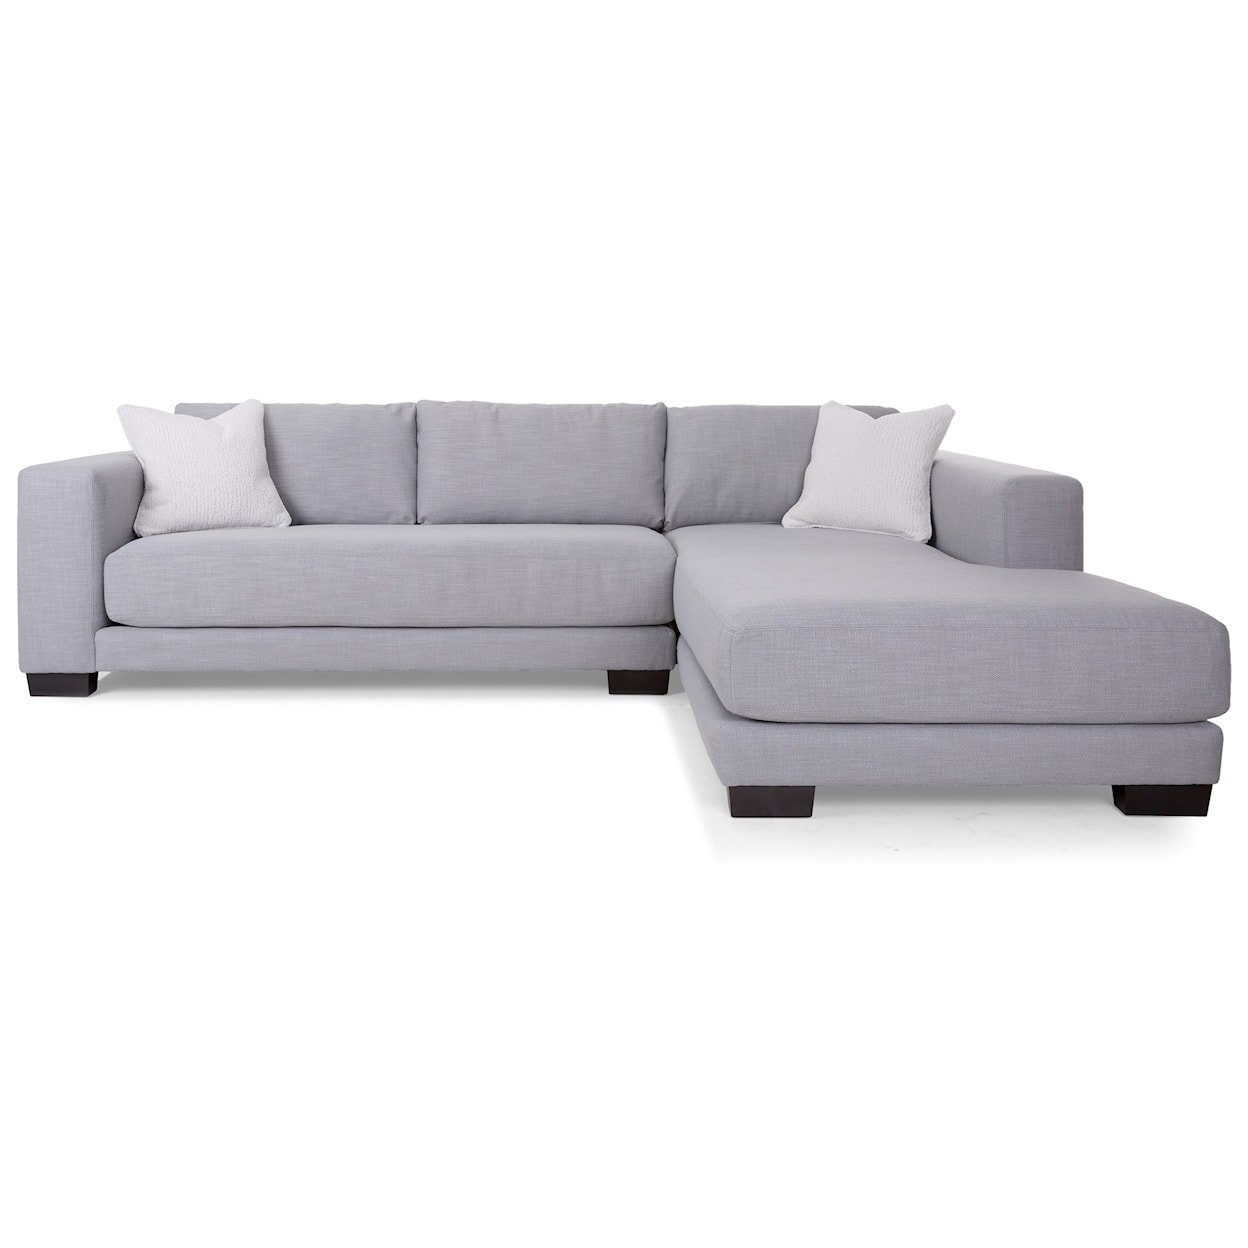 Decor-Rest 2802 Sectional Sofa